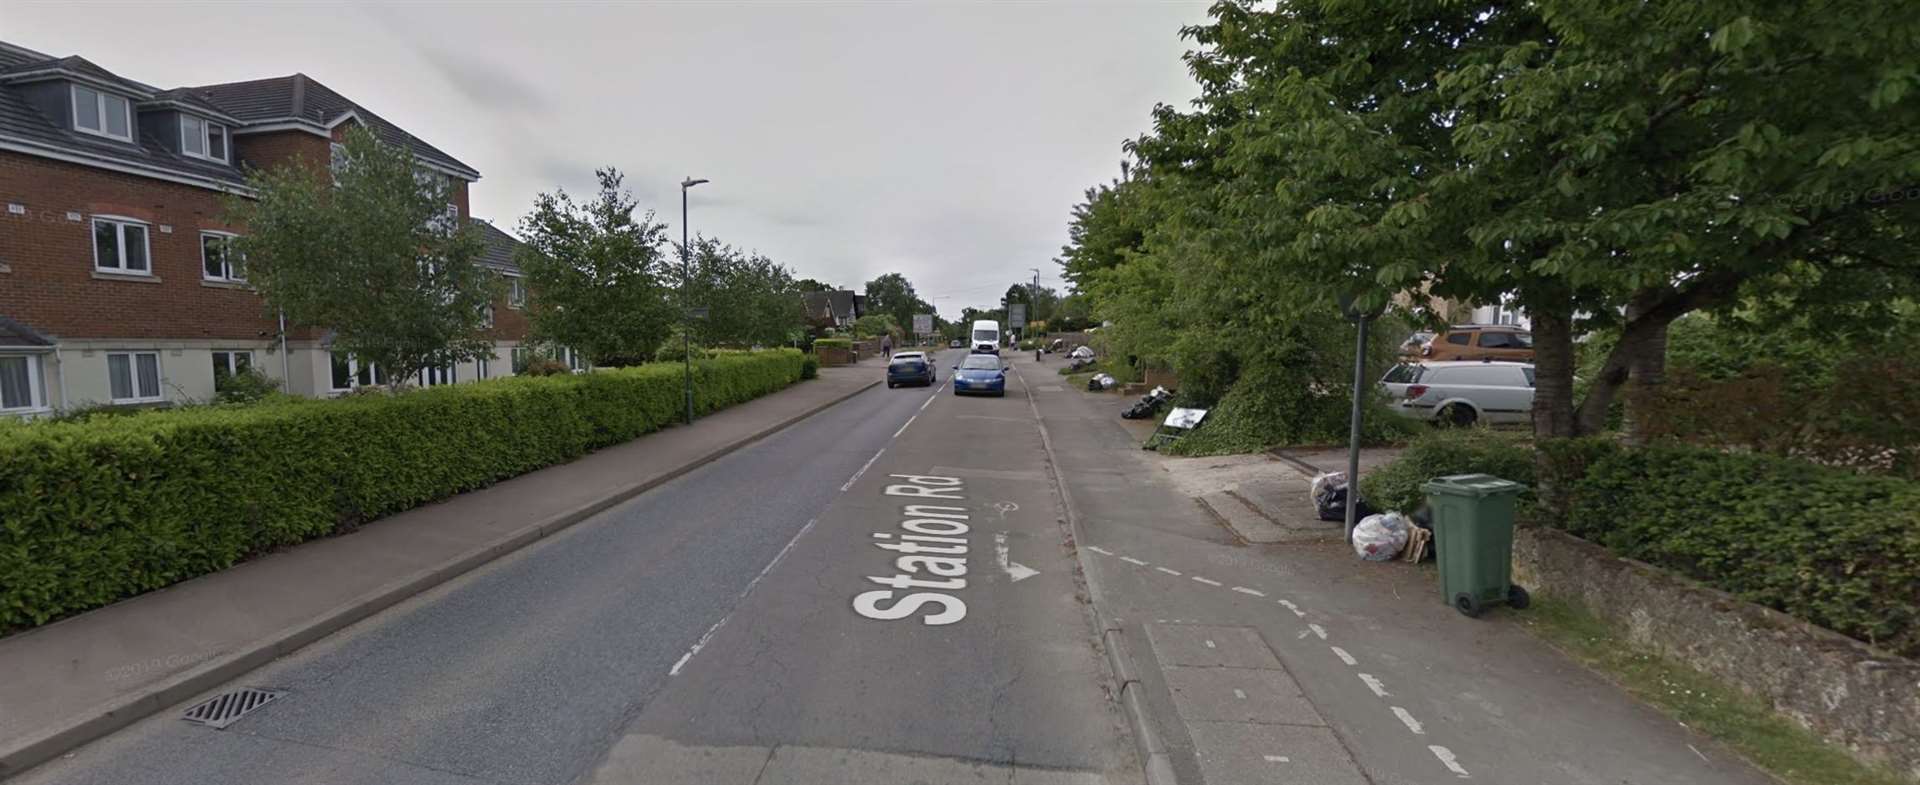 Station Road in Edenbridge. Picture: Google Street View